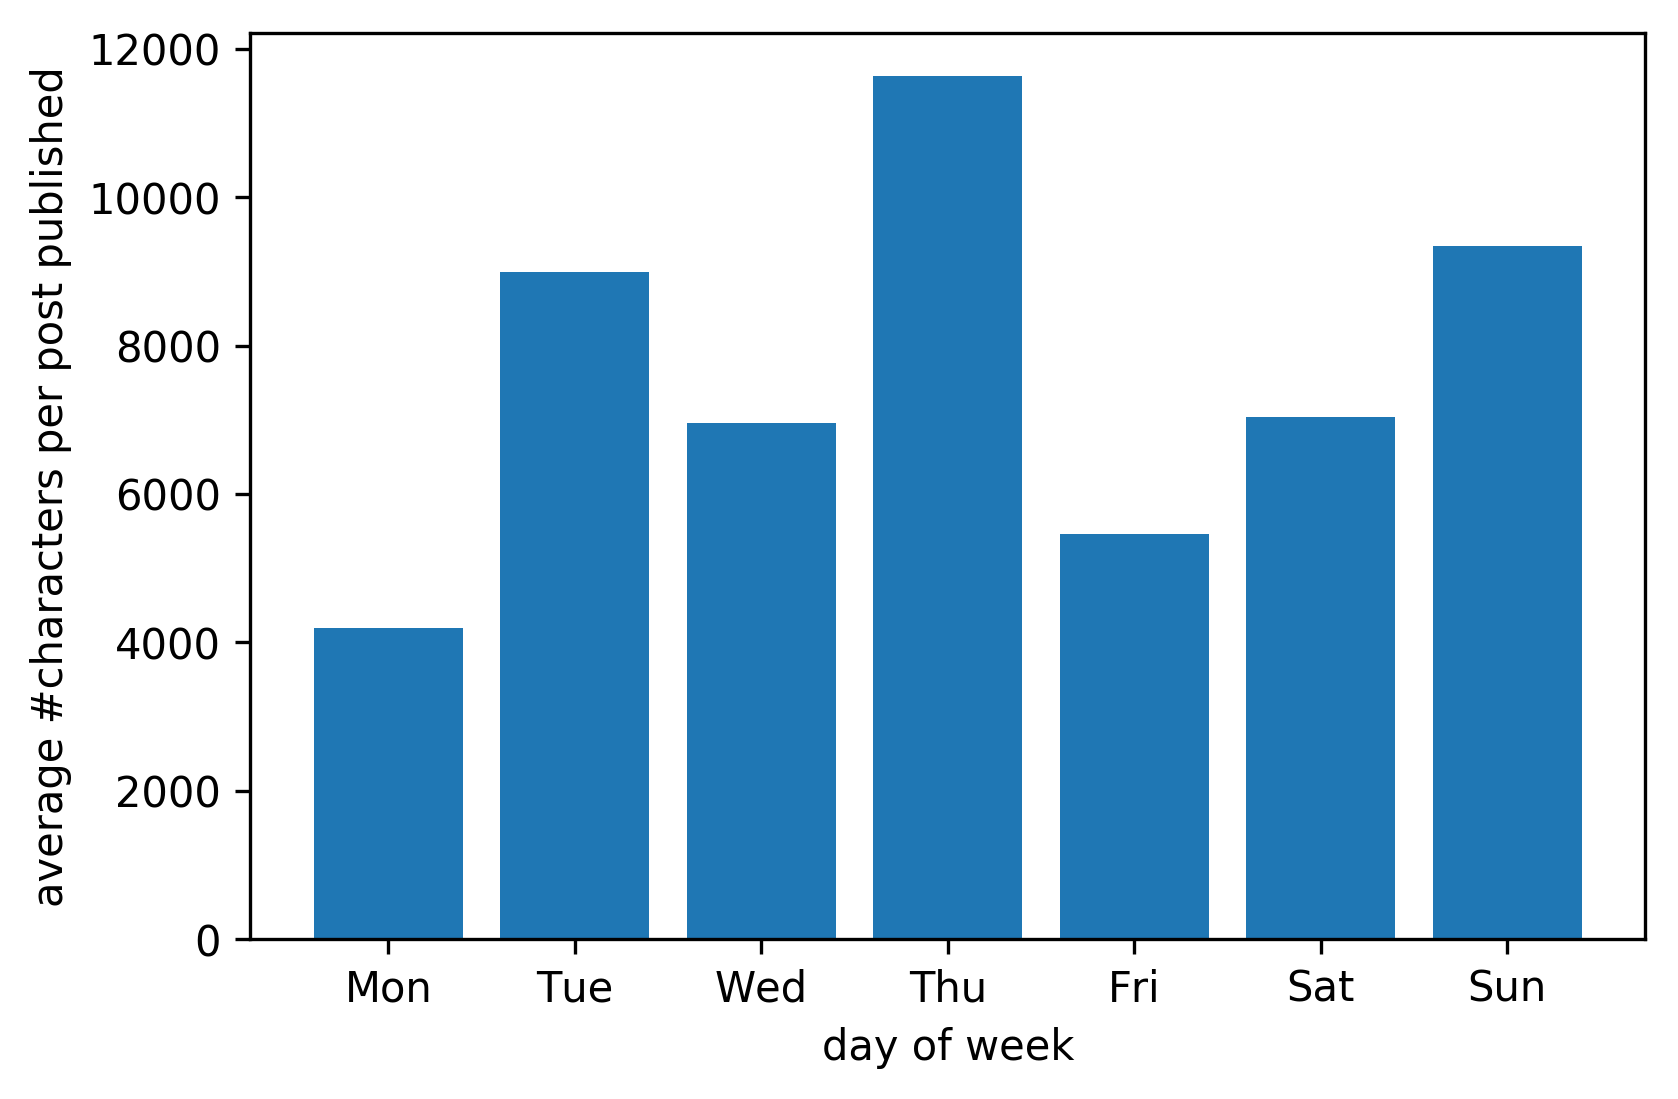 Bar plot of average #characters per post per day of week